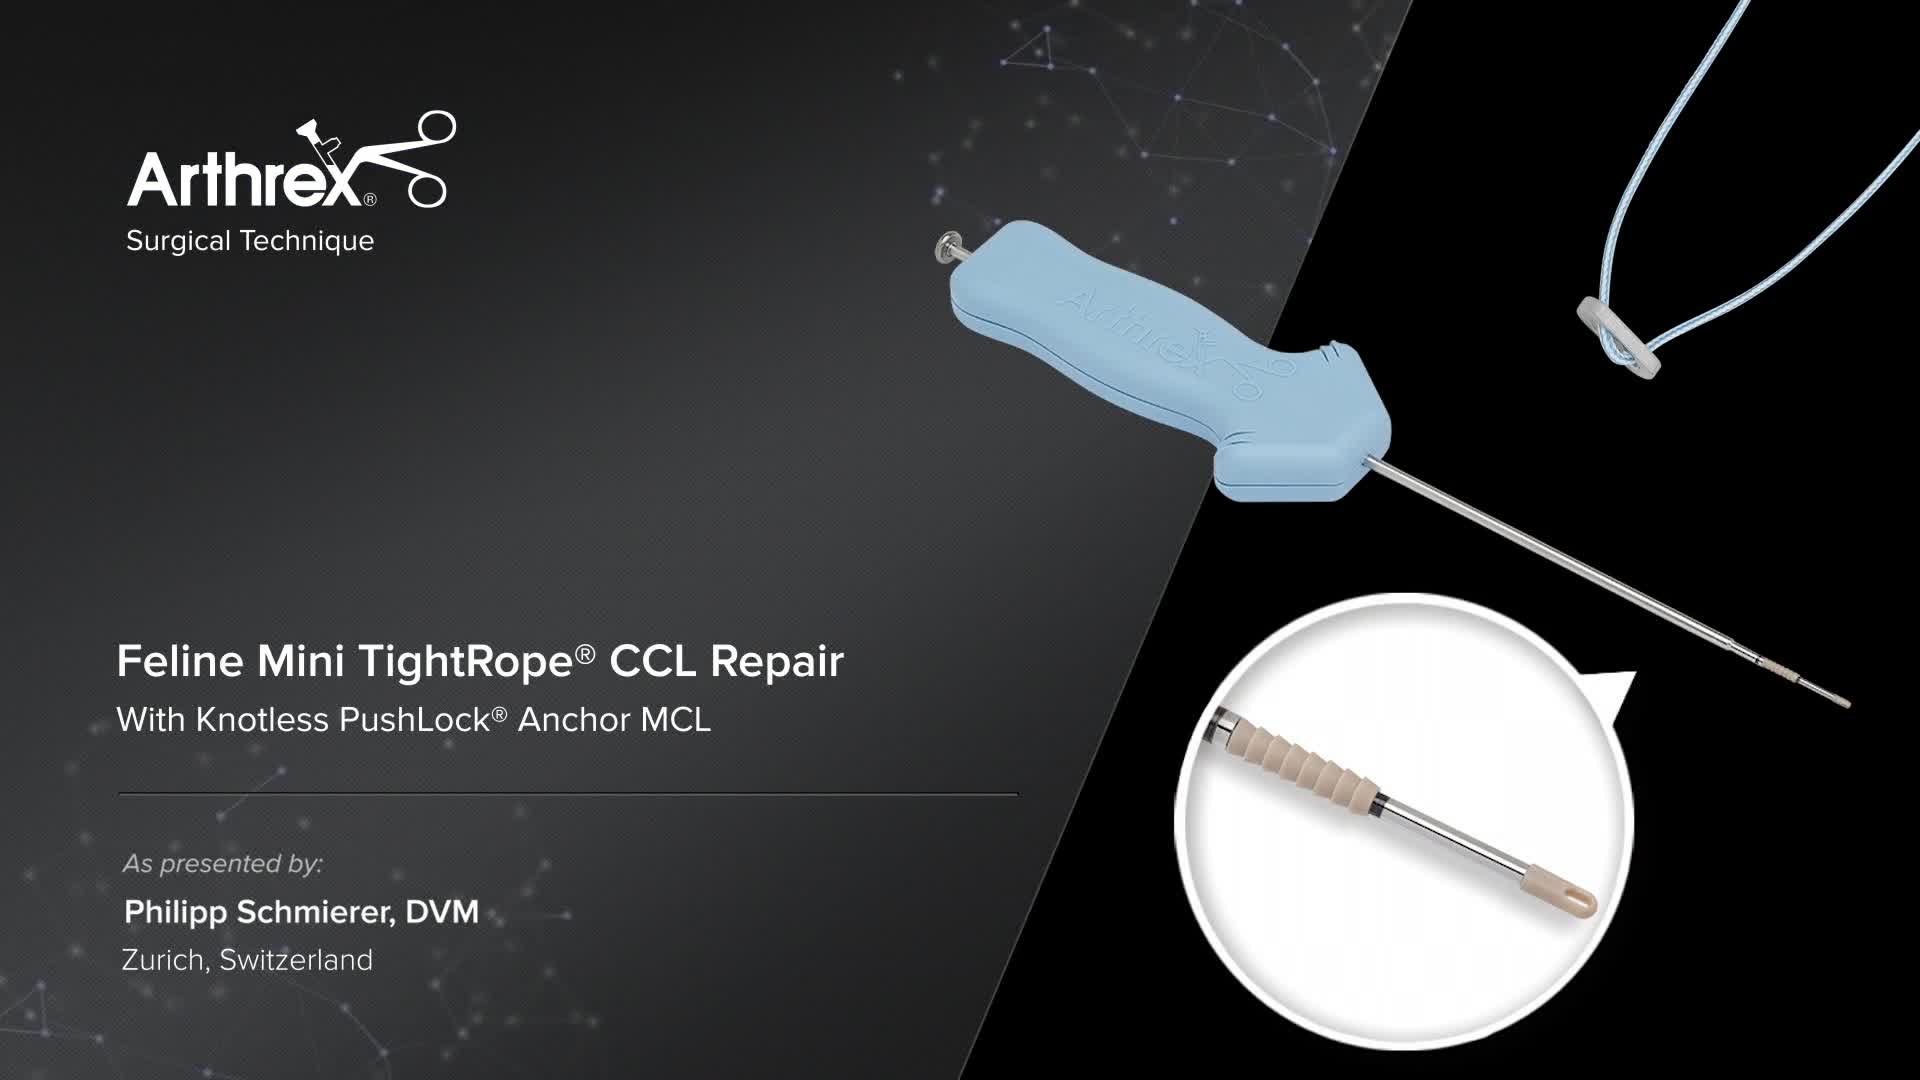 Arthrex - Feline Mini TightRope® CCL Repair With Knotless PushLock